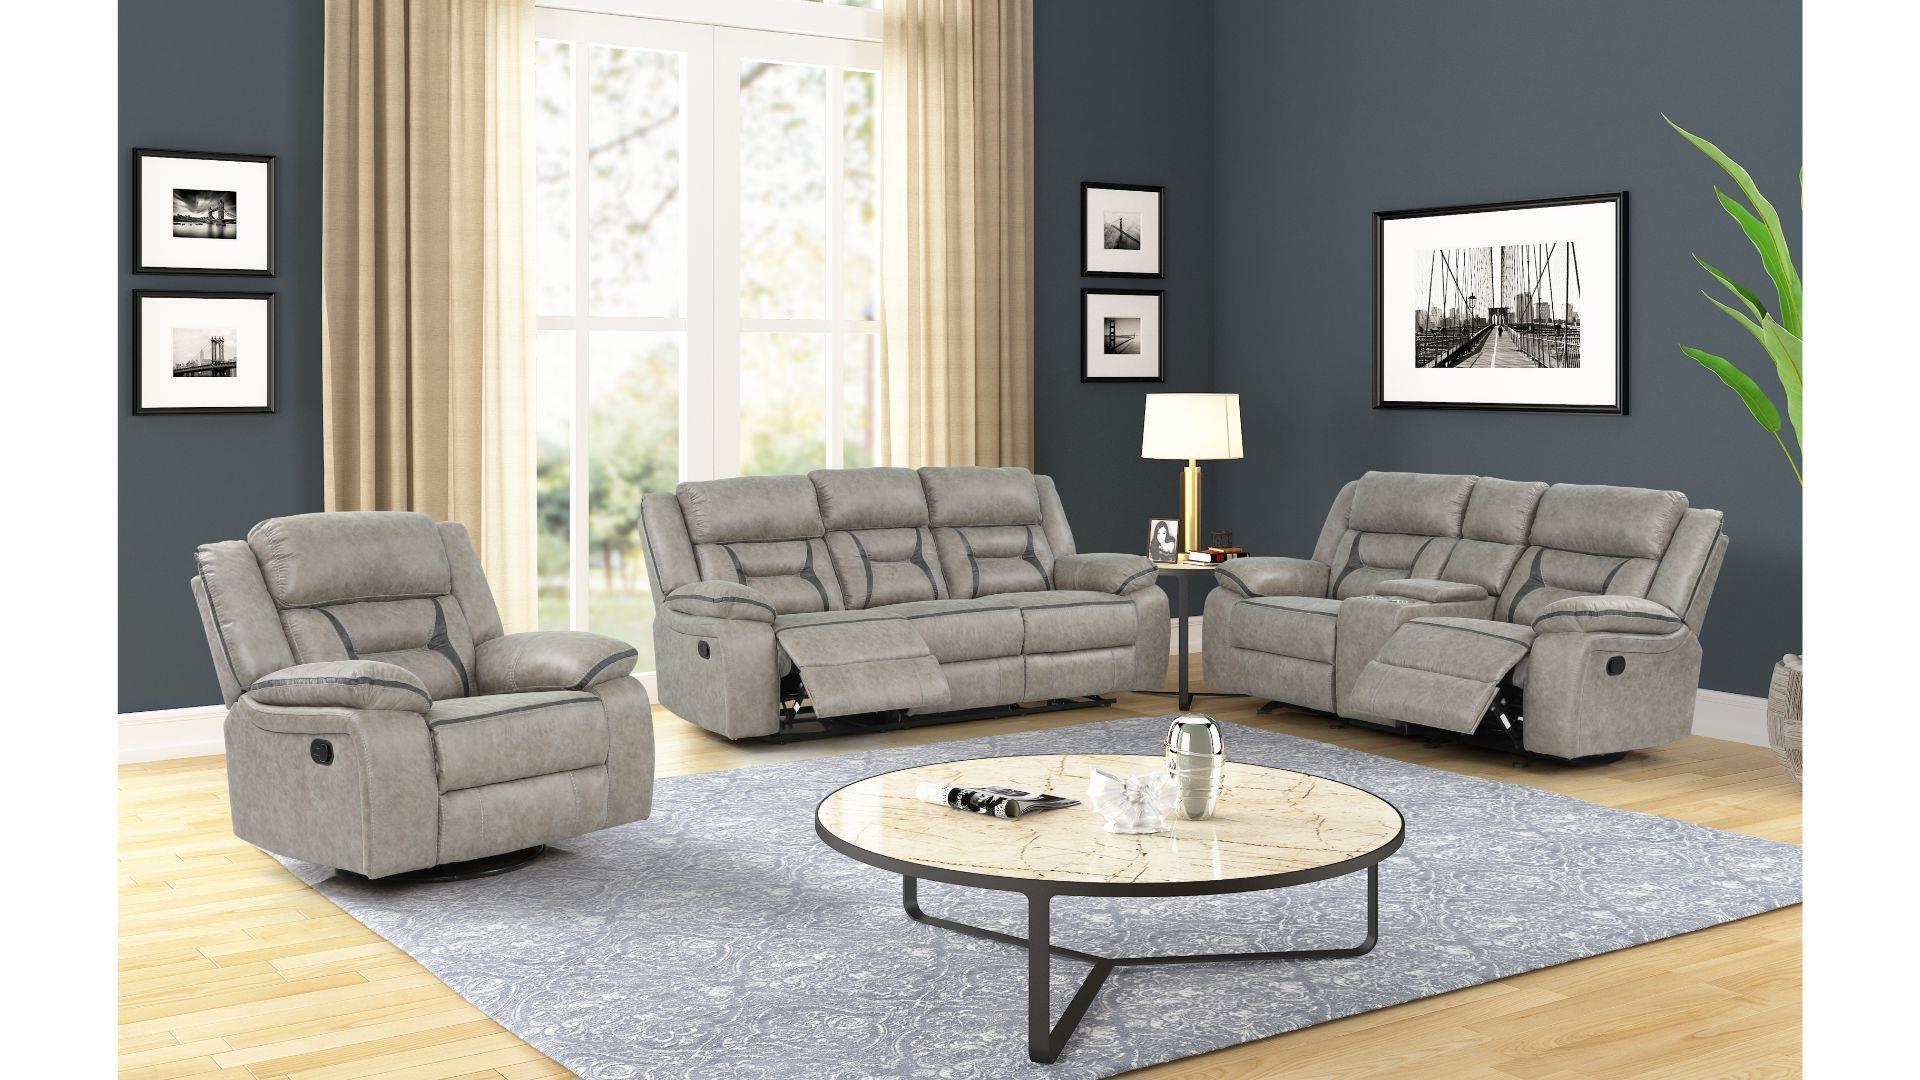 

    
Gray Faux Leather Manual Recliner Sofa DENALI Galaxy Home Contemporary Modern
